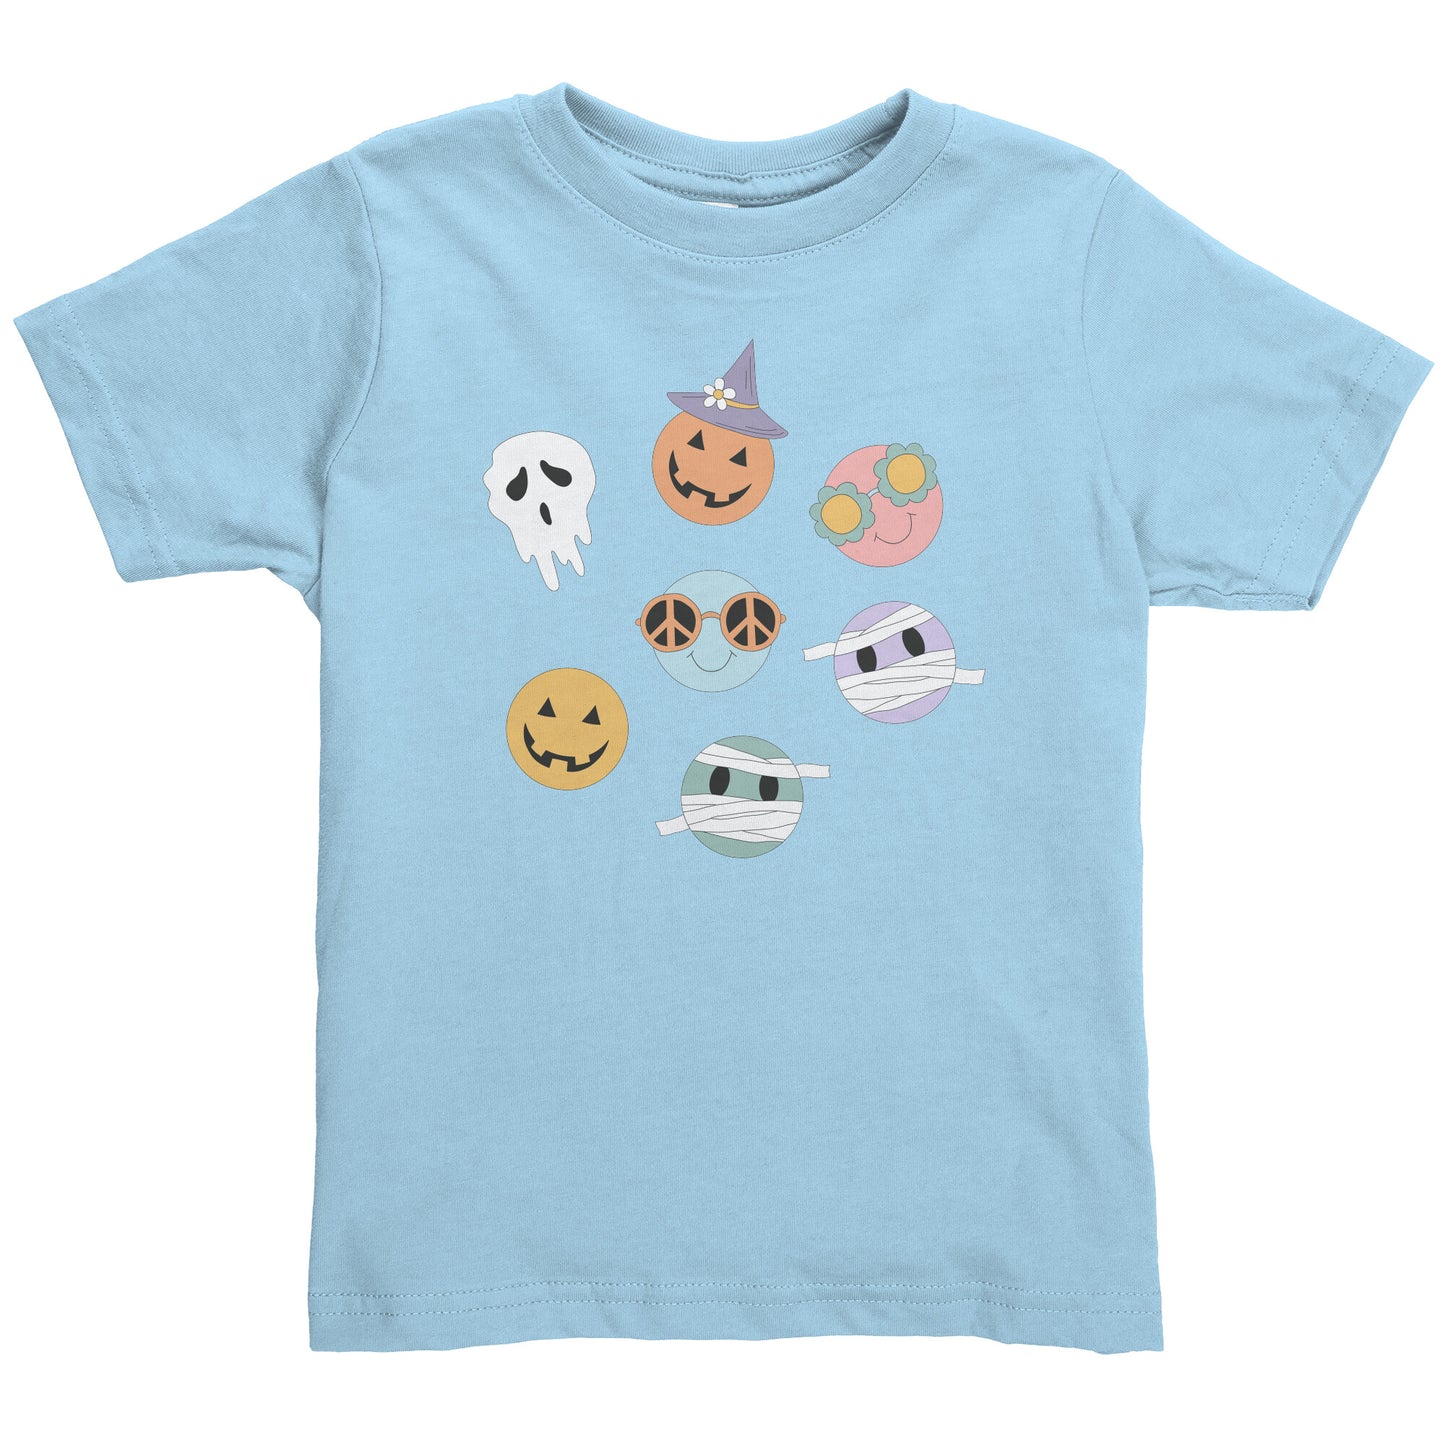 Mummy Smile Cute Halloween Toddler Shirt